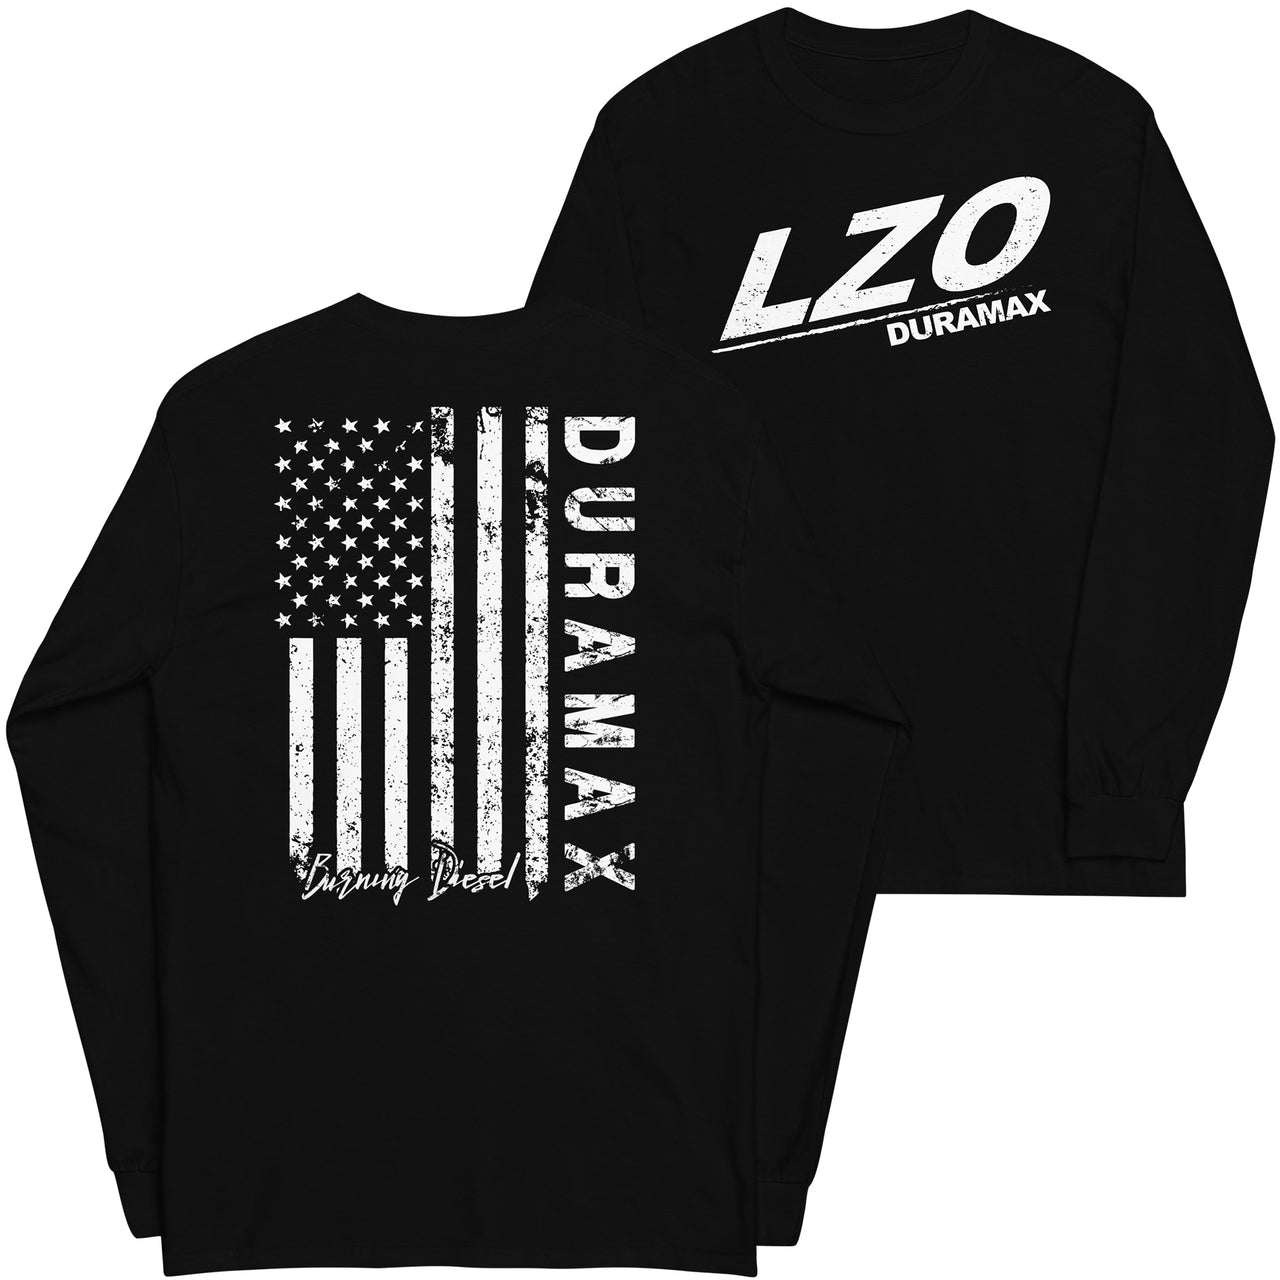 LZO Duramax Long Sleeve Shirt With American Flag Design in black